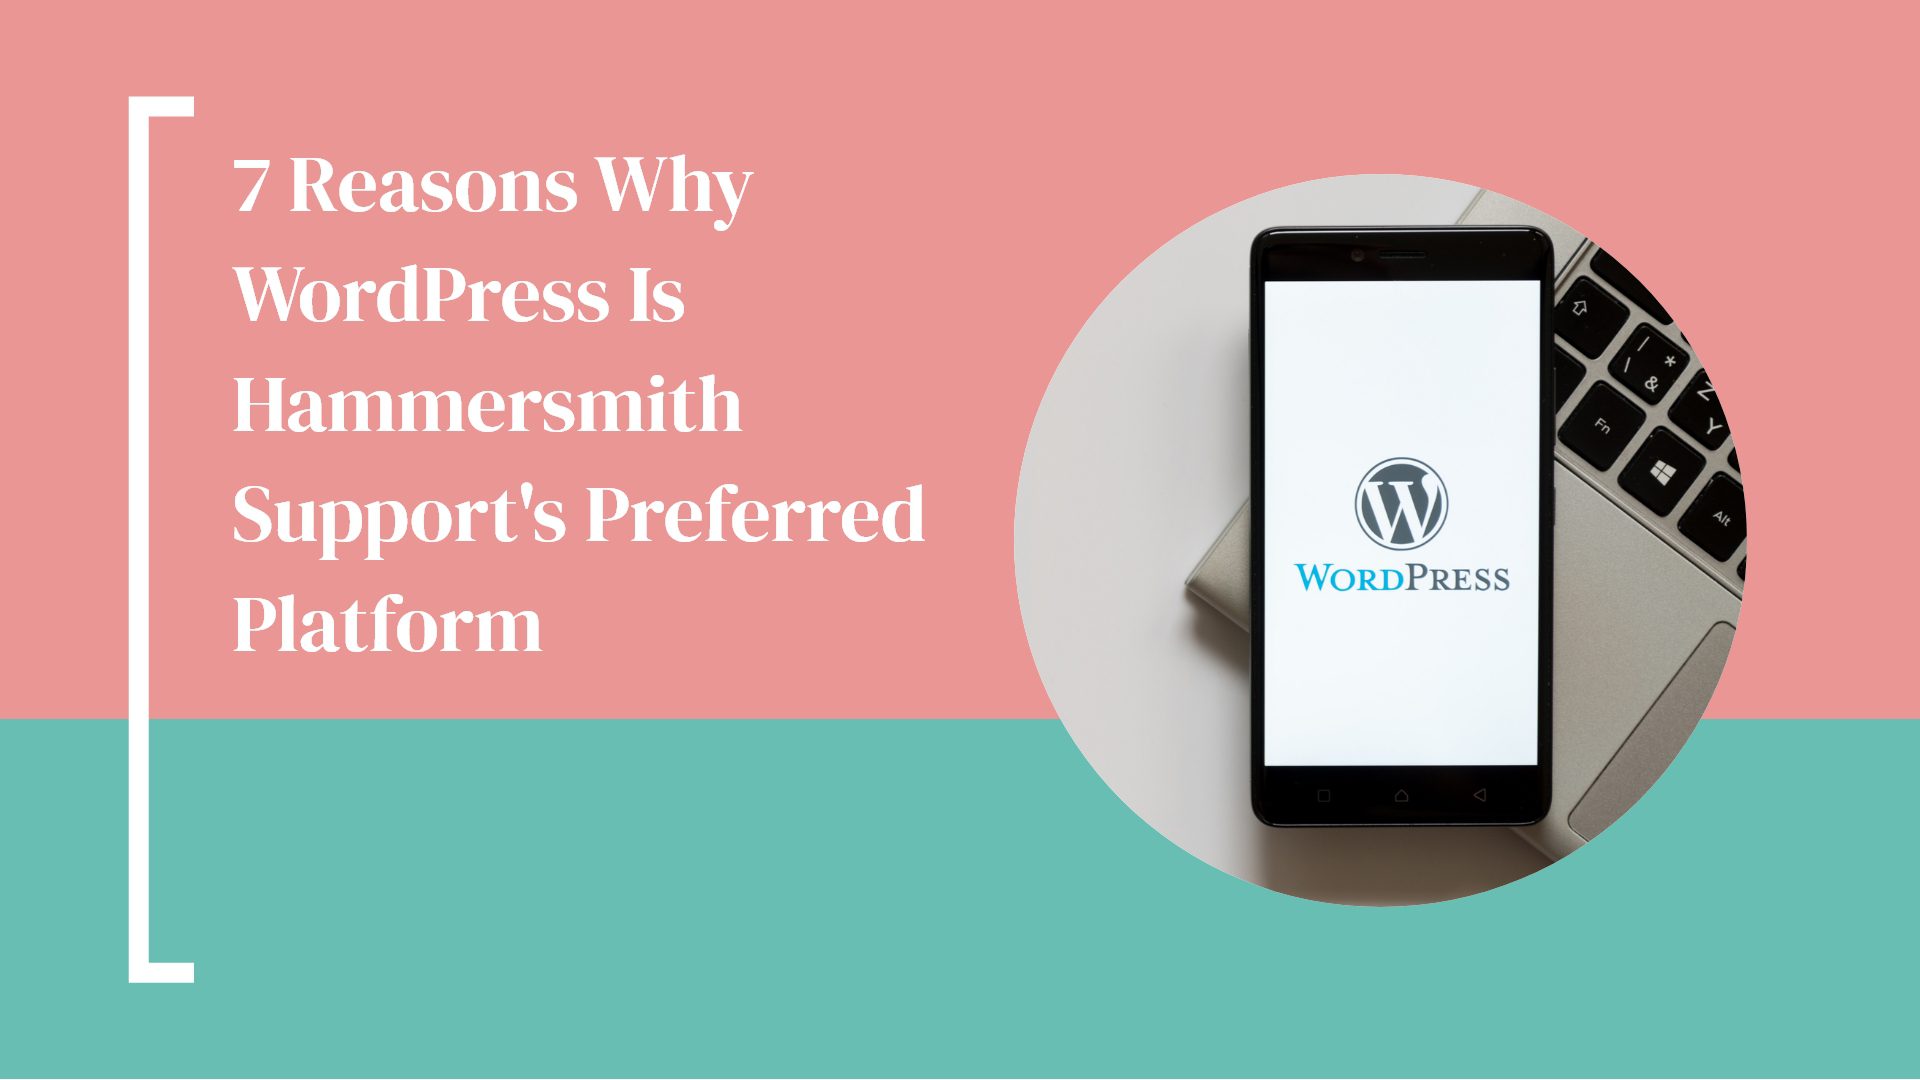 7 Reasons Why WordPress Is Hammersmith Support's Preferred Platform